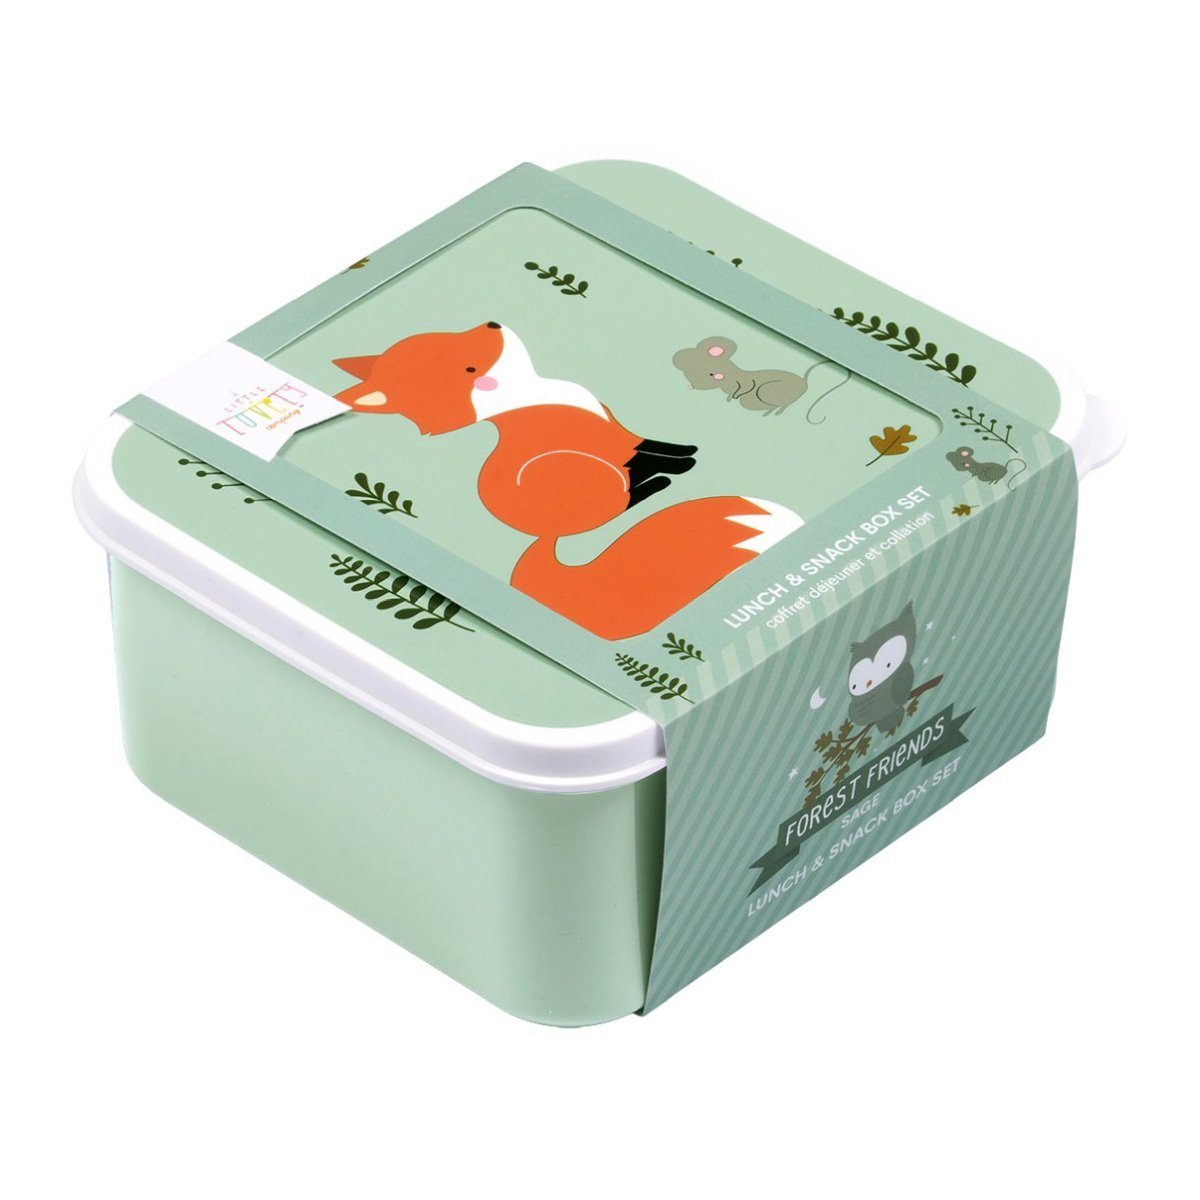 A Waldfreunde lovely Company Brotdosen Lunchbox Set little 4er